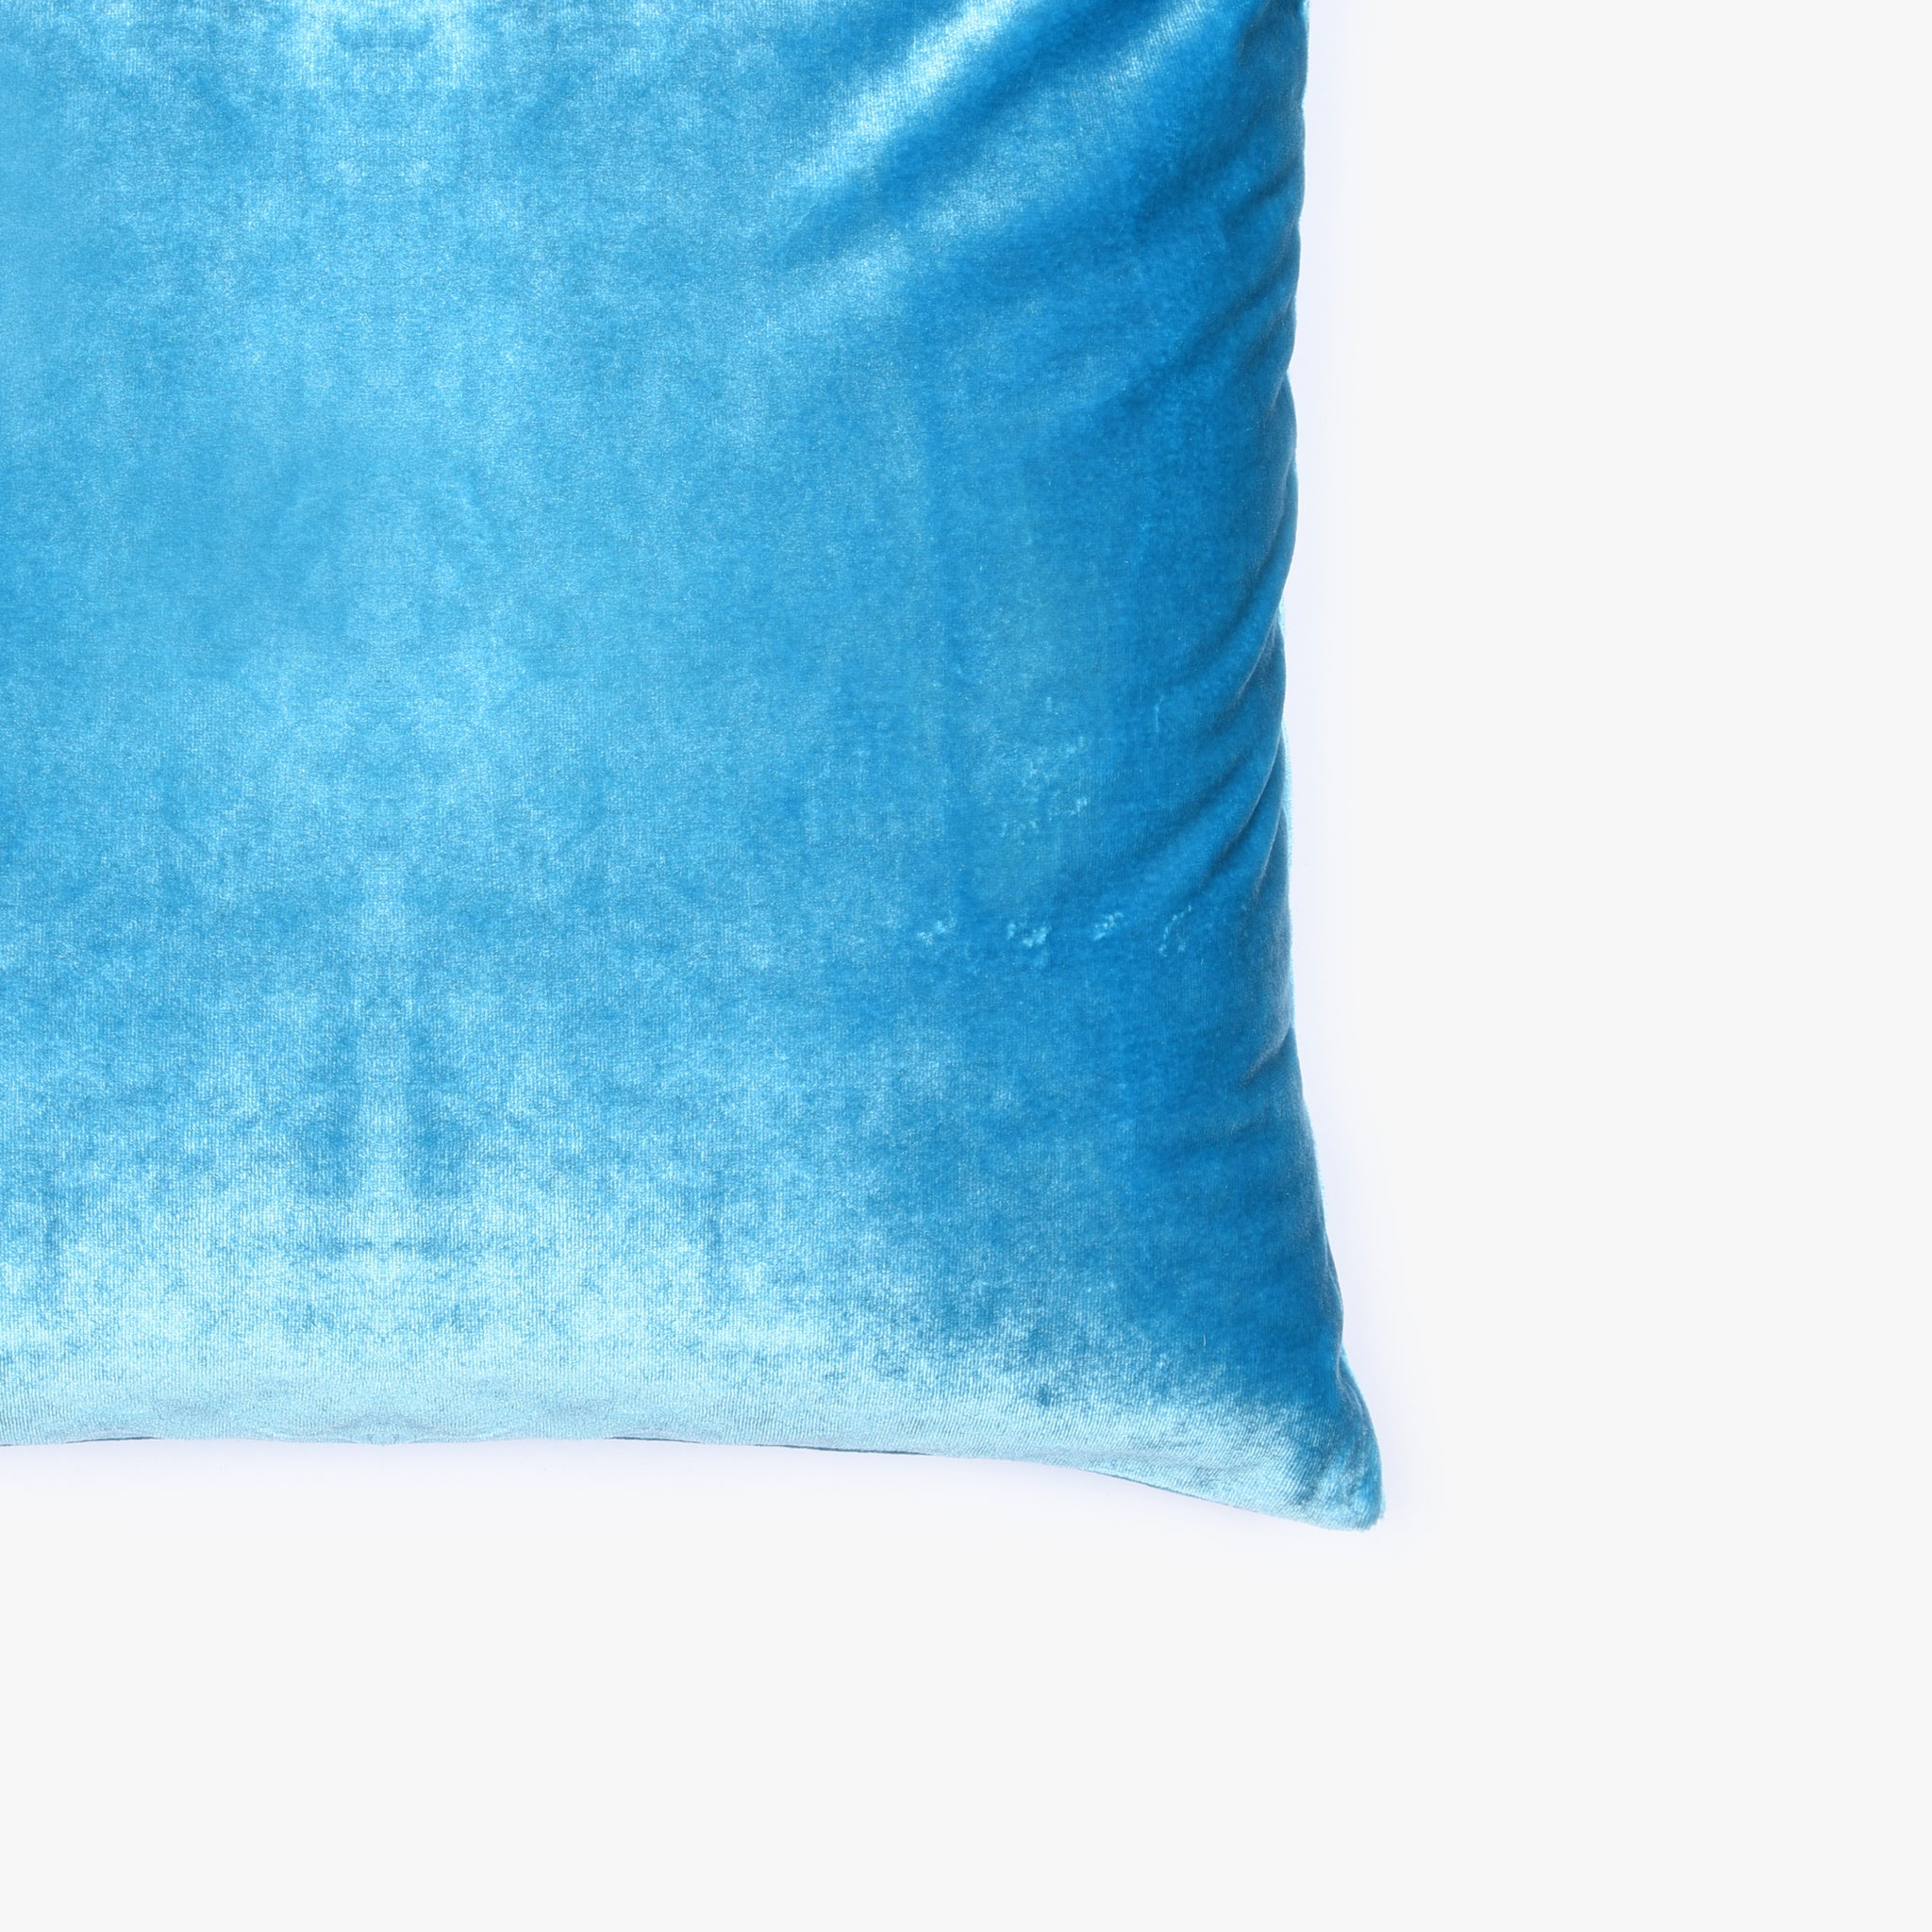 Silky Blue Cushion Cover